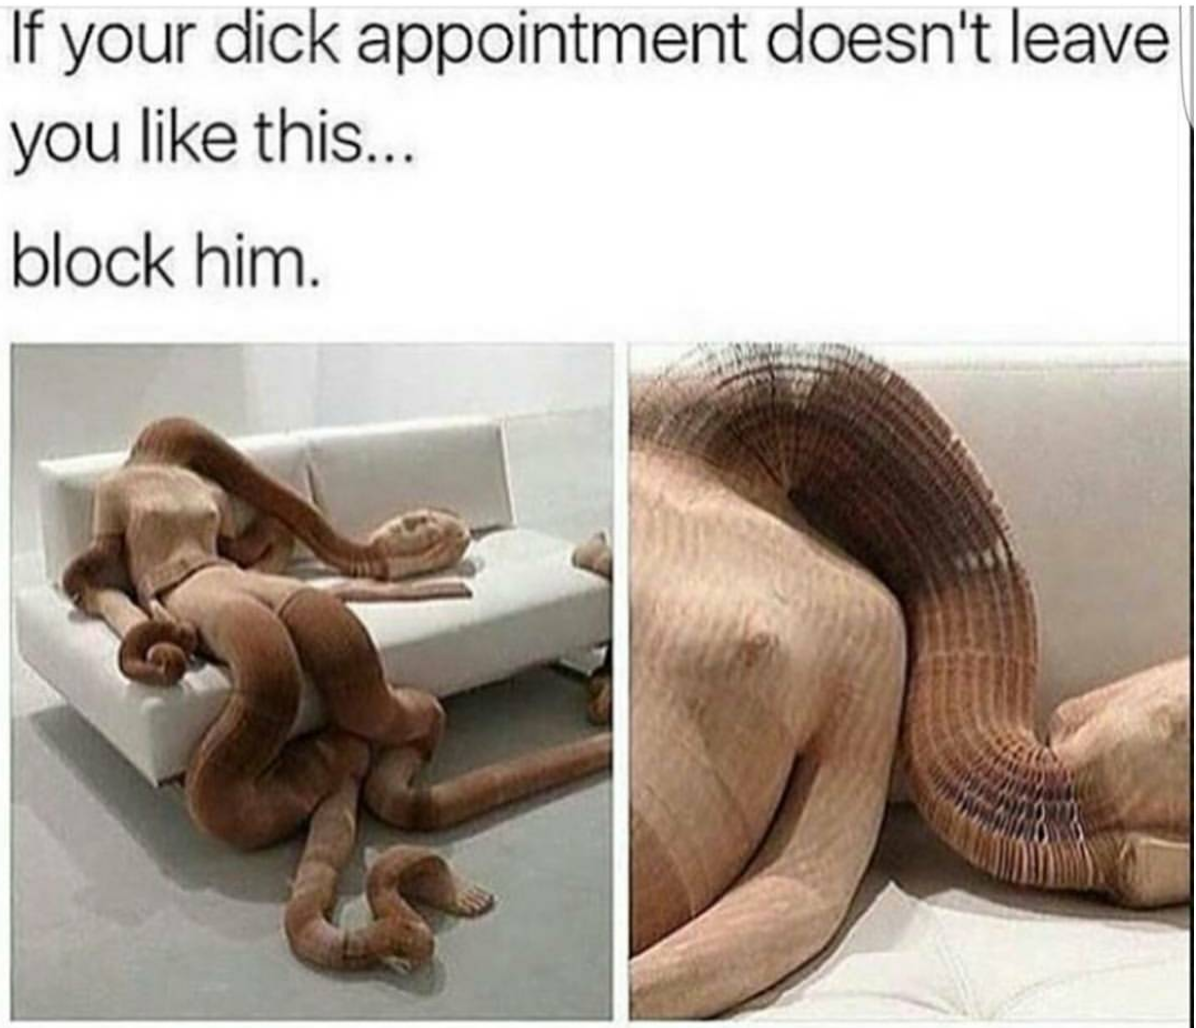 Dick appointment quarantine meme